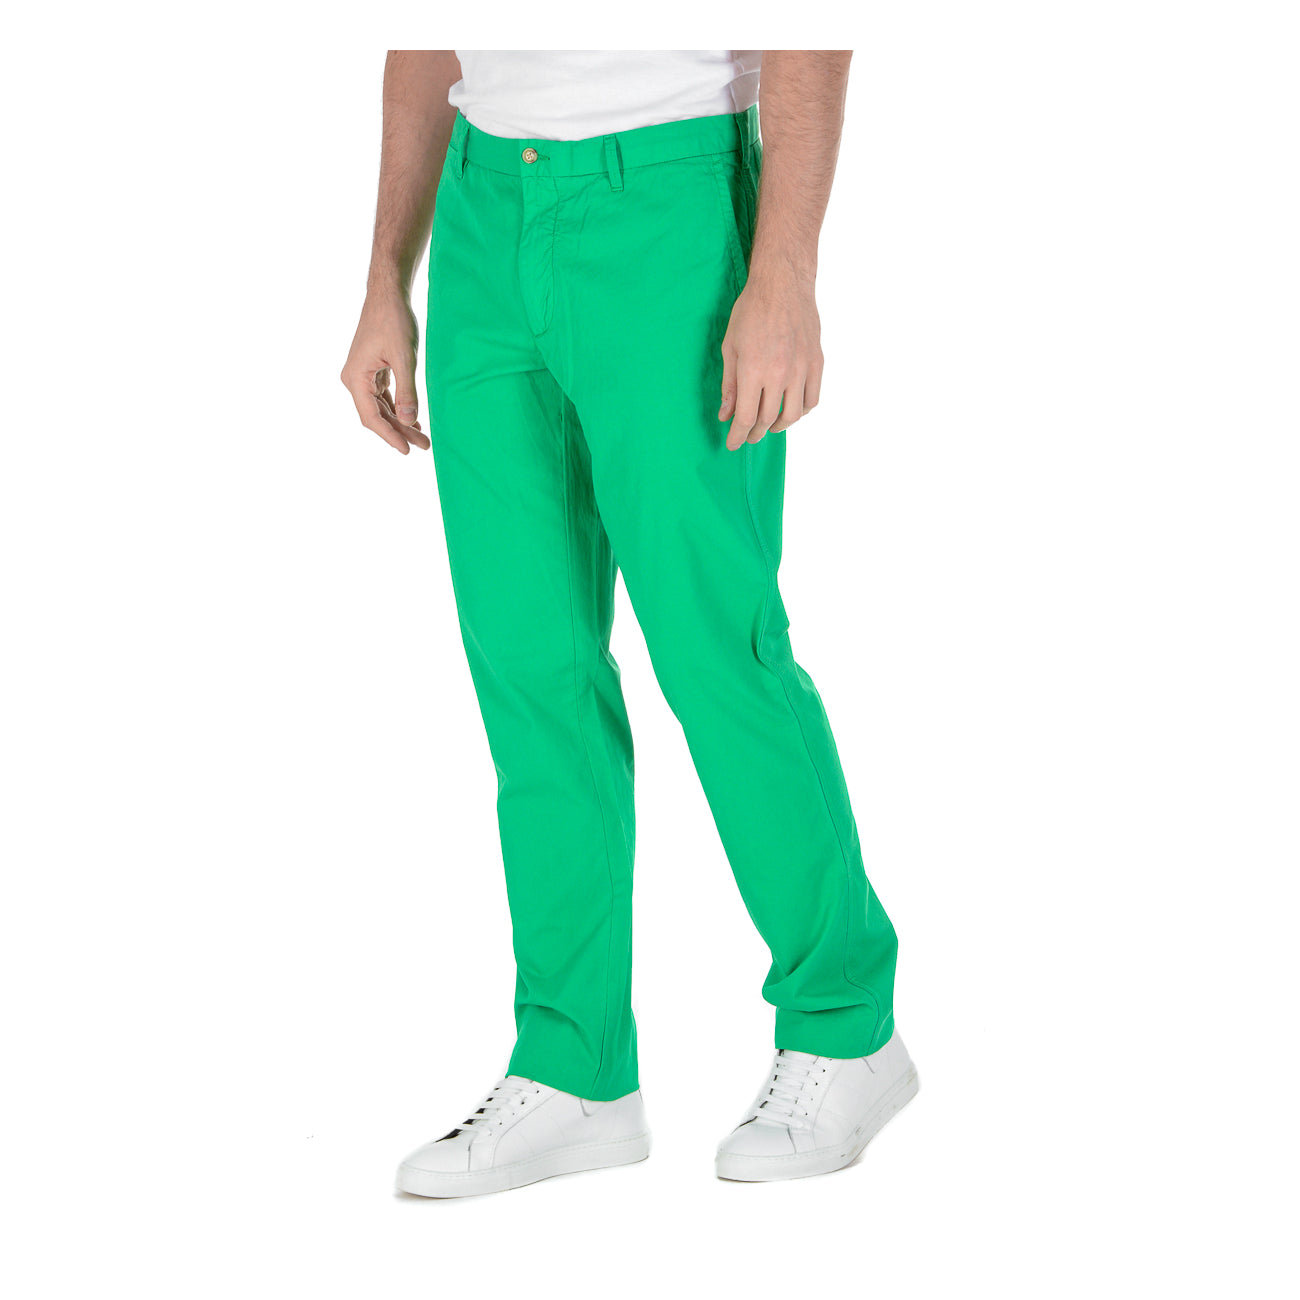 Polo by Ralph Lauren Mens Pants Green